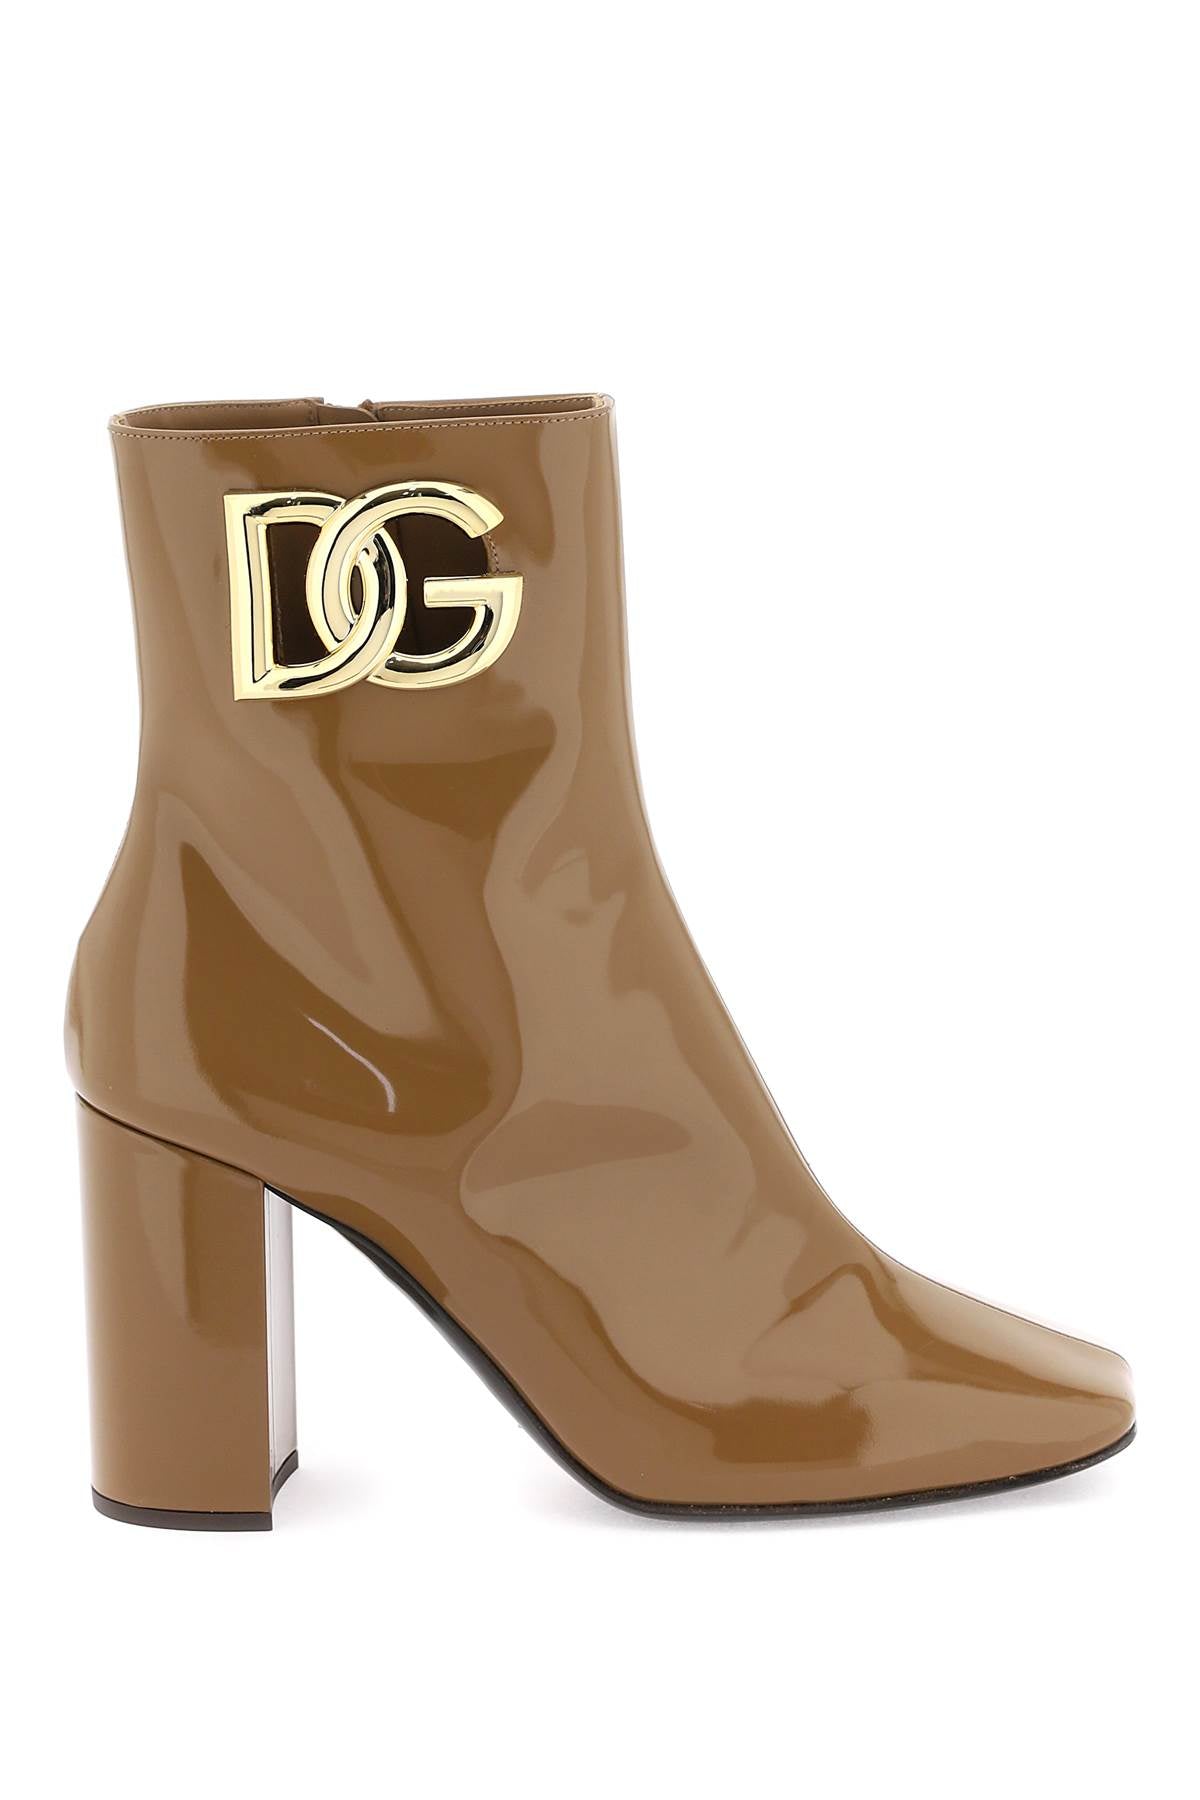 Dolce & gabbana dg logo ankle boots-0